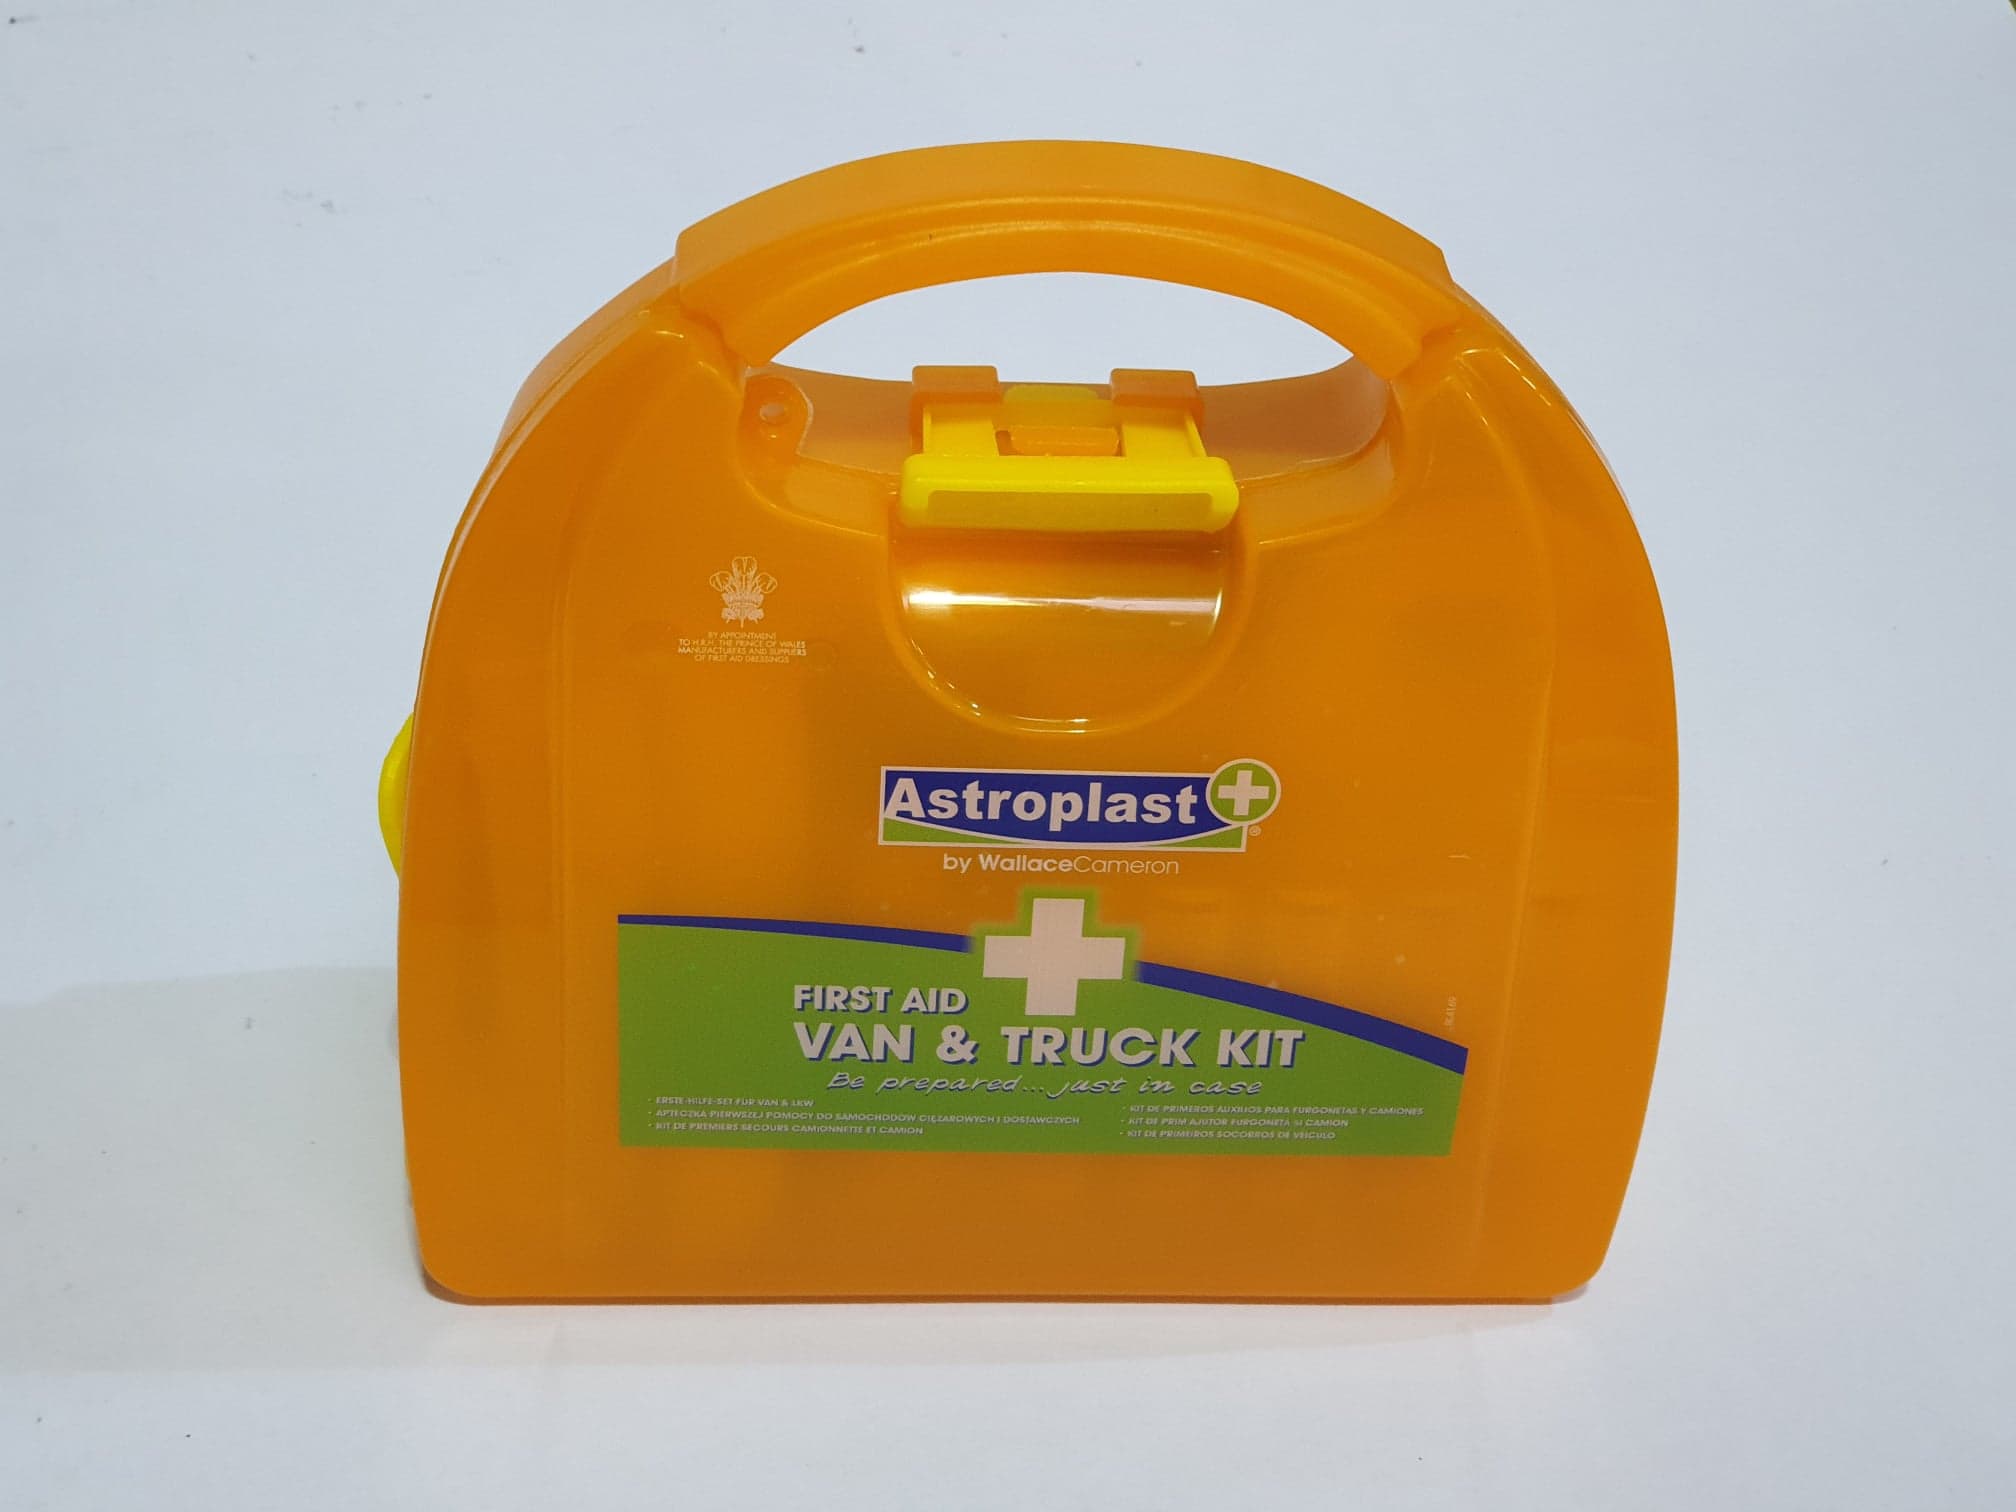 First Aid Kit Orange Box c/w Yellow Bracket